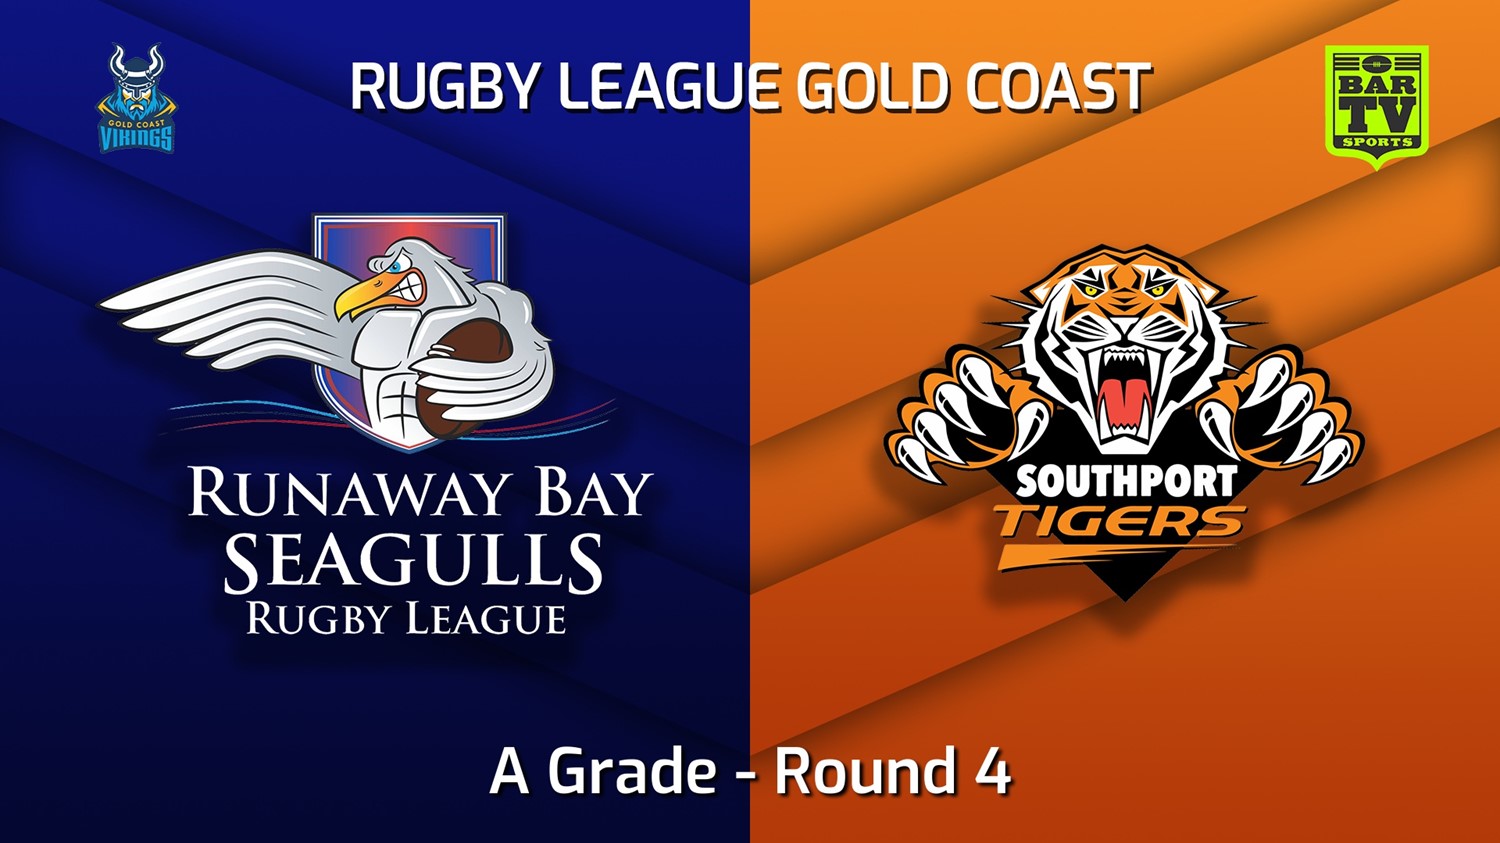 220424-Gold Coast Round 4 - A Grade - Runaway Bay Seagulls v Southport Tigers Minigame Slate Image